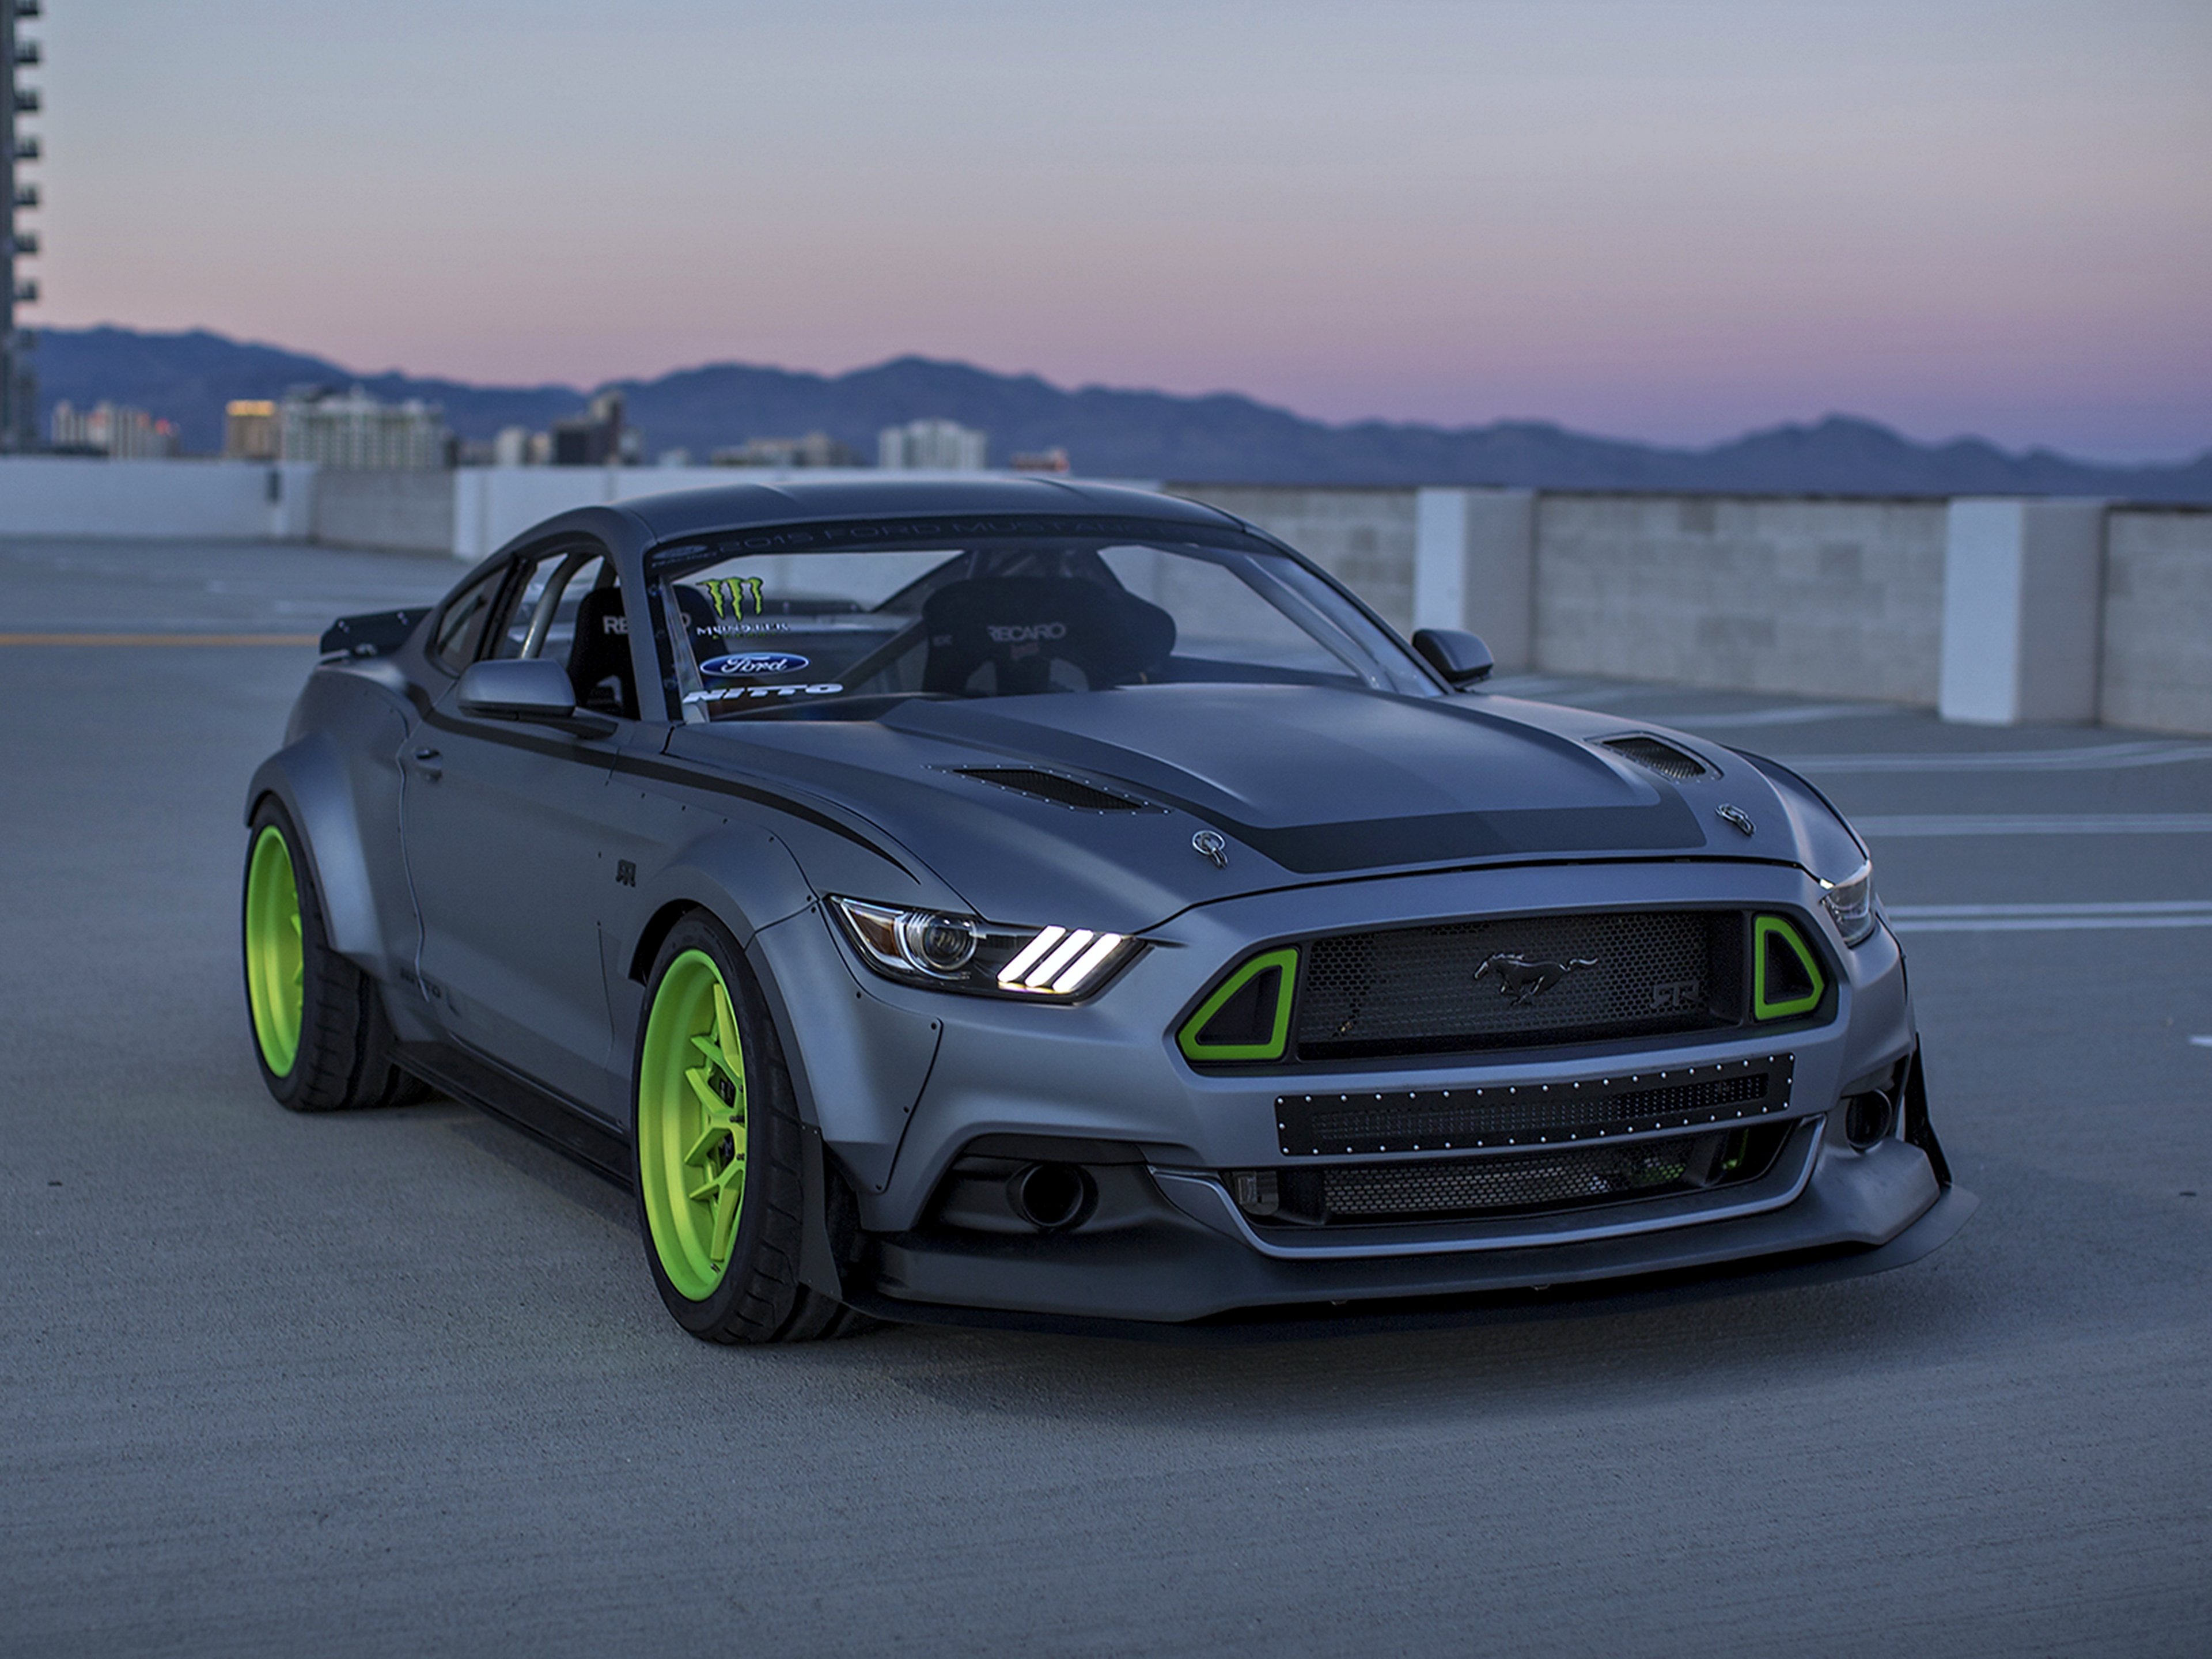 2014, Ford, Mustang, Rtr, Spec 5, Gray, Speed, Motors, Supercars, Cars Wallpaper